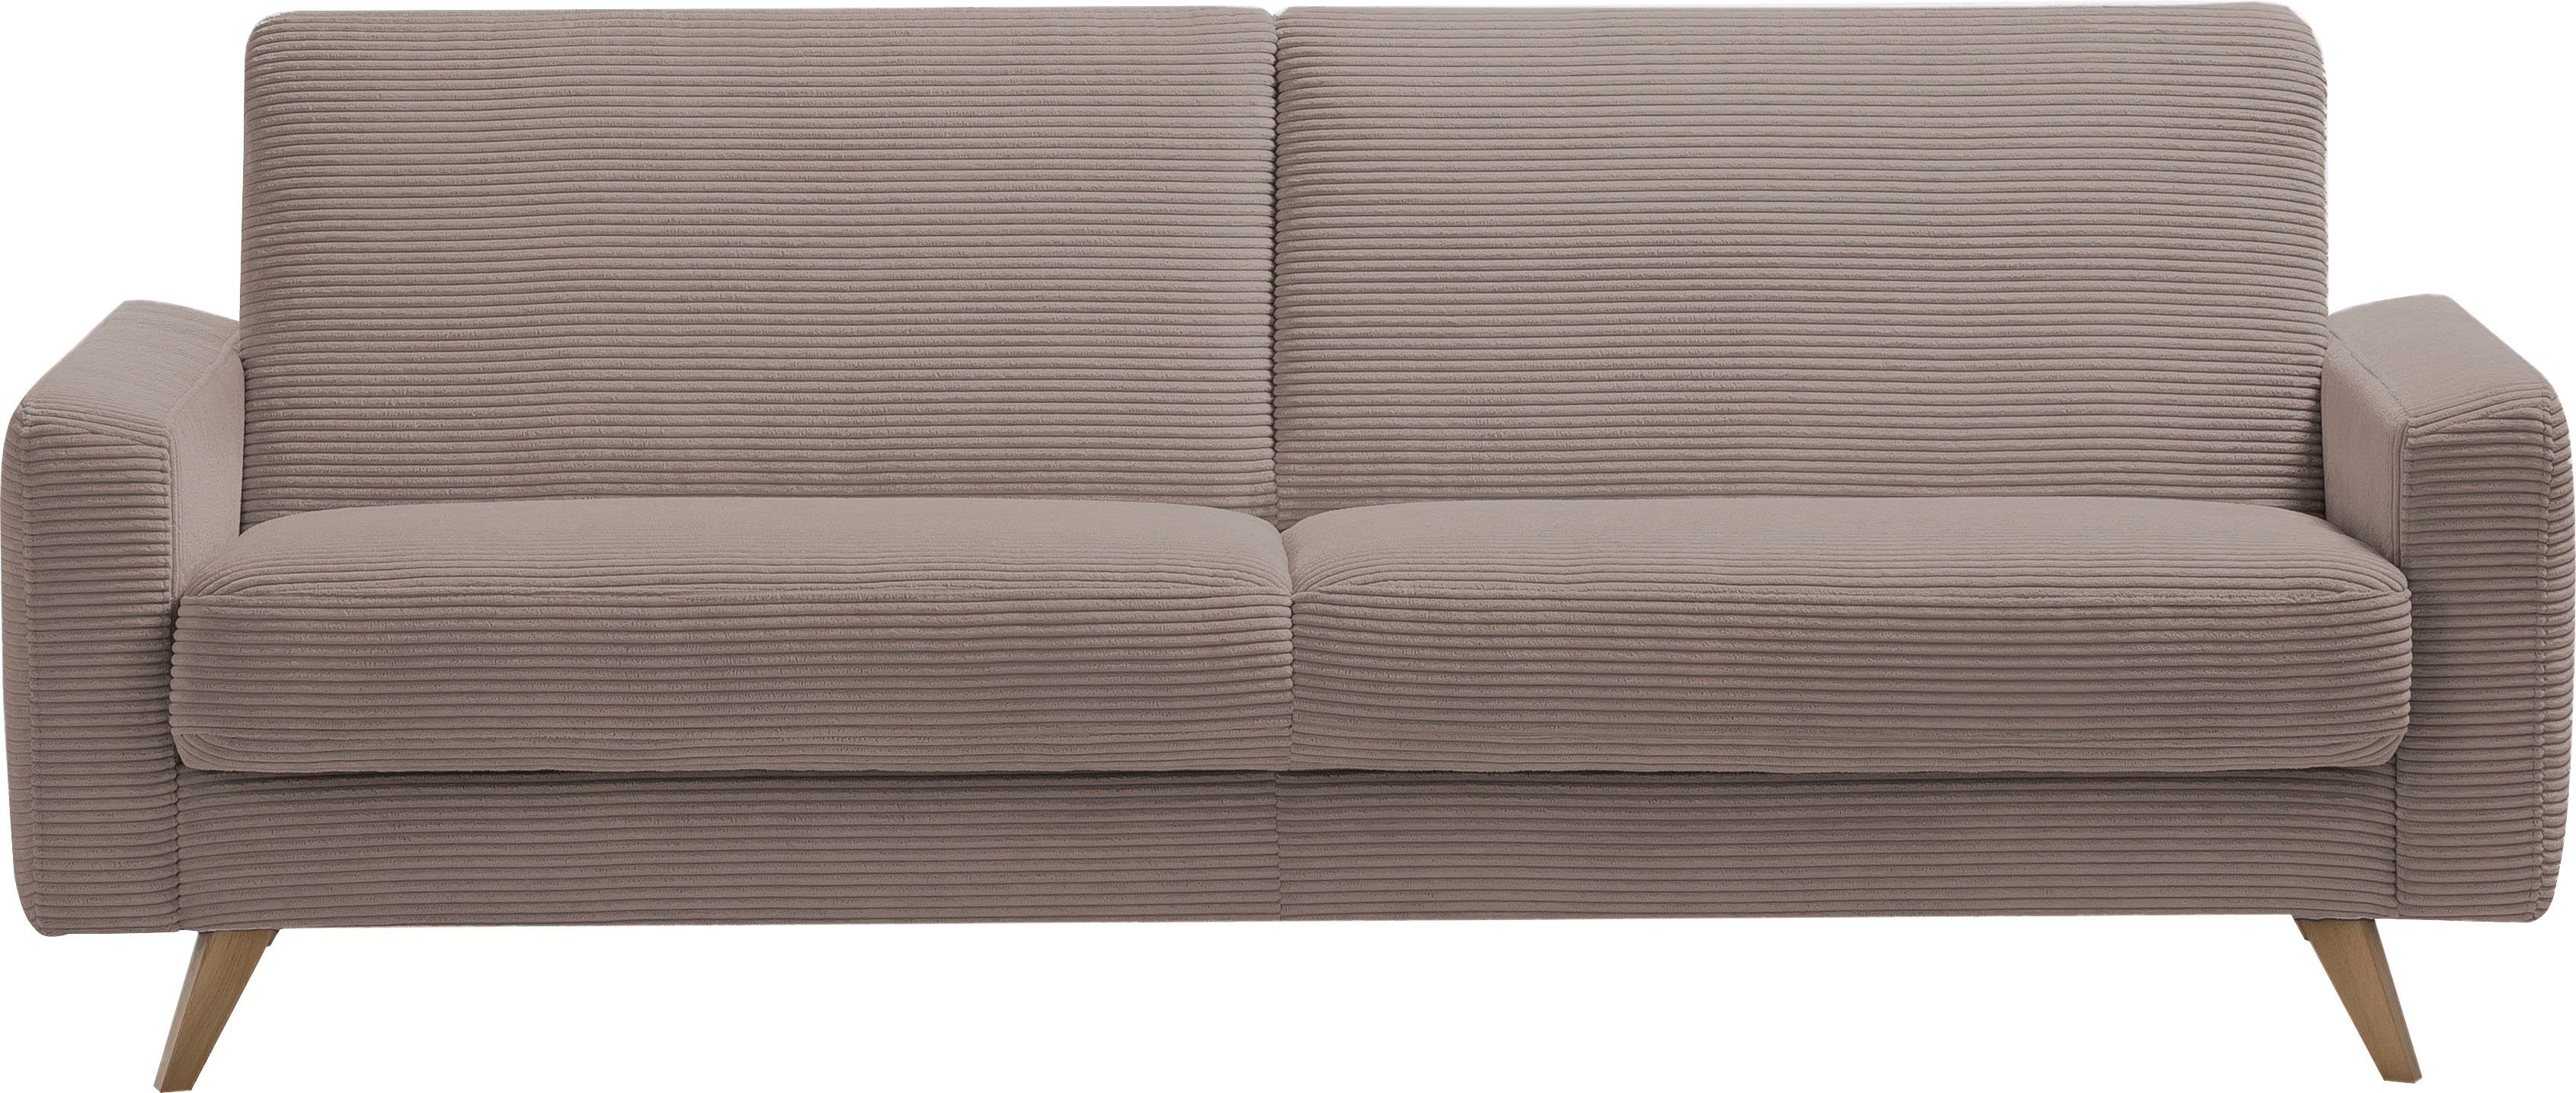 fashion Bettfunktion exxpo und Bettkasten Inklusive 3-Sitzer sofa - Samso, cappucino